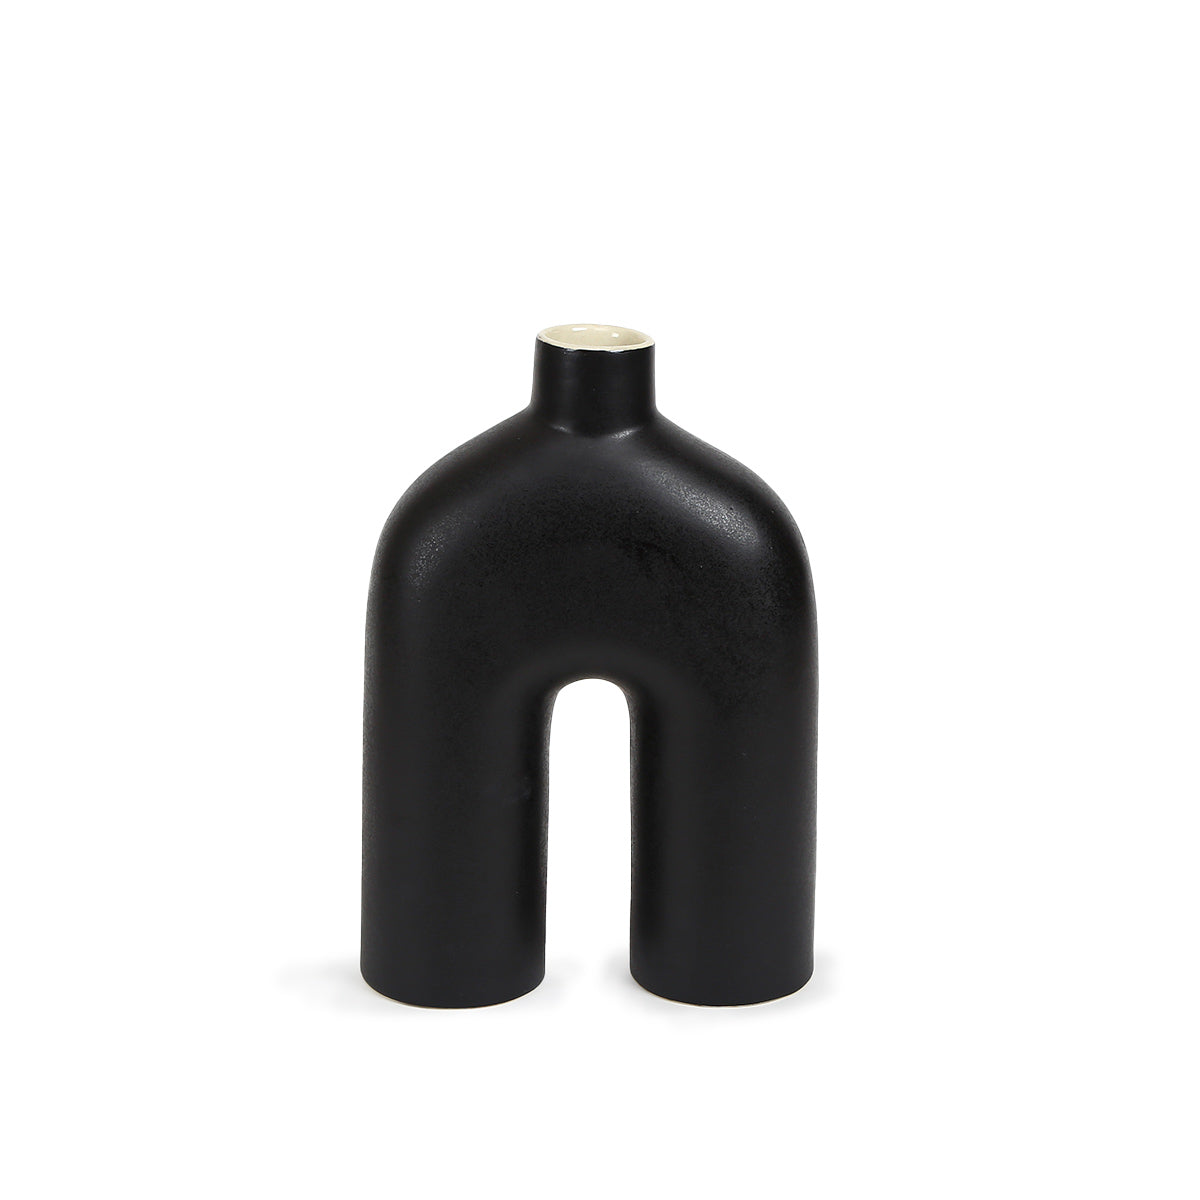 Arch Black Vase